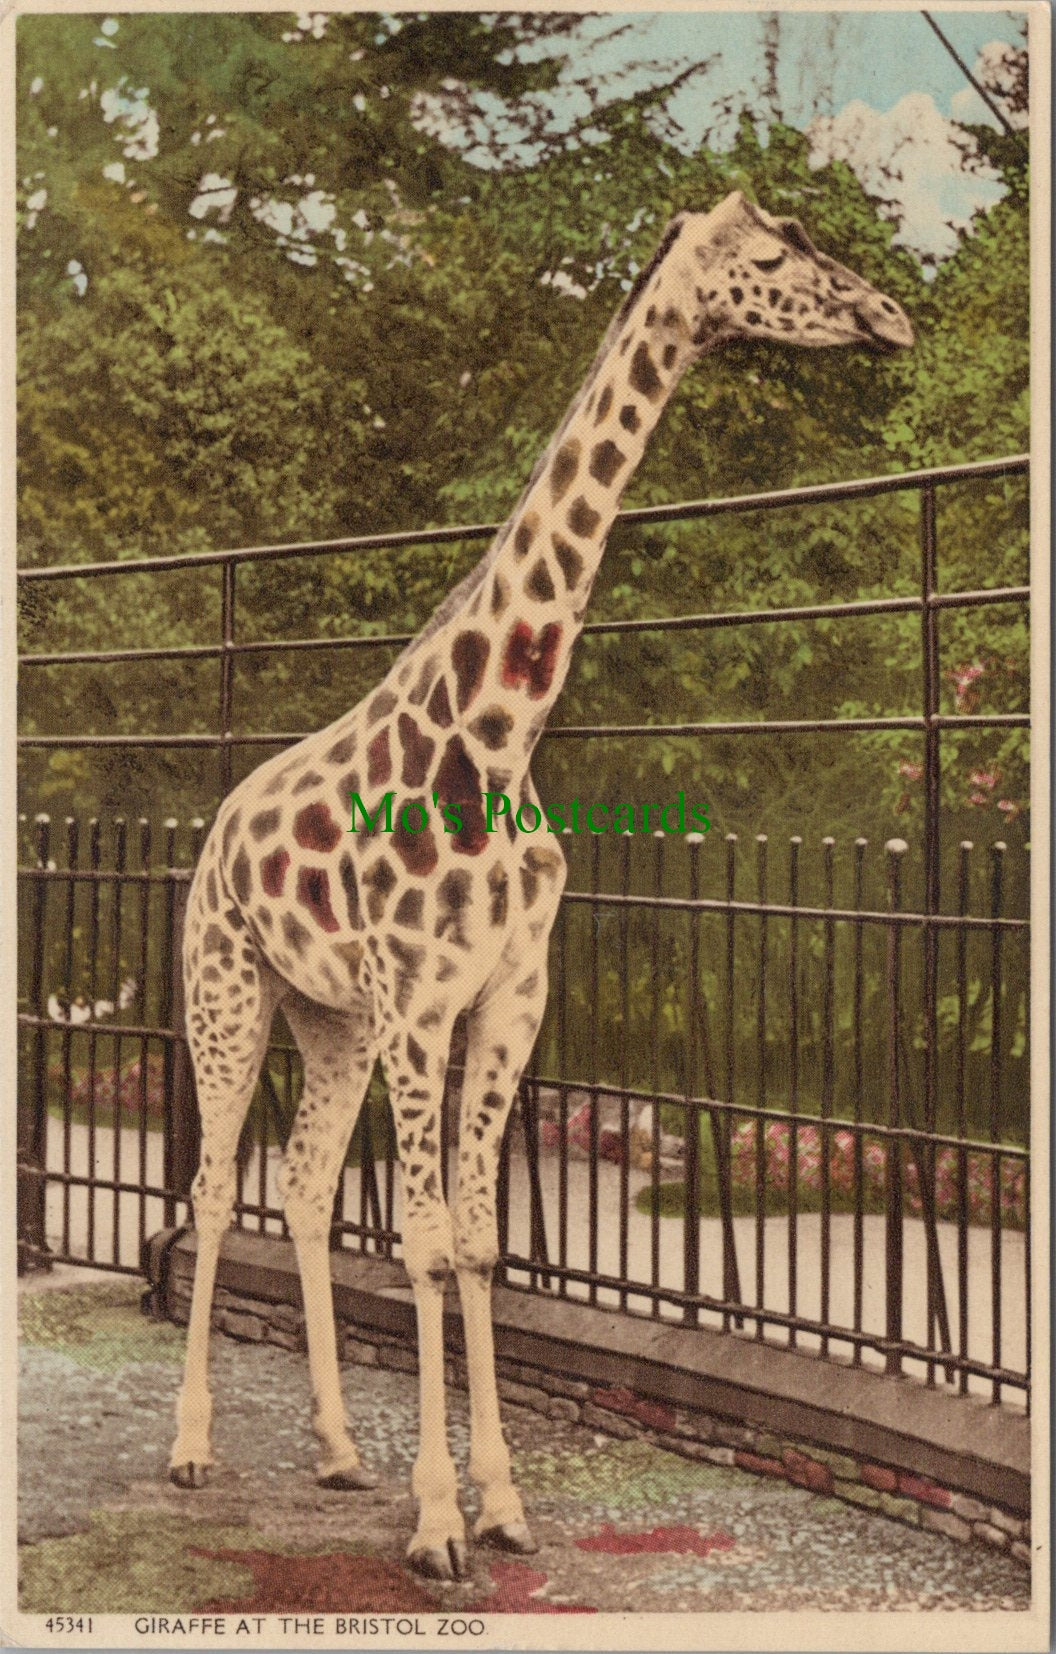 A Giraffe at The Bristol Zoo